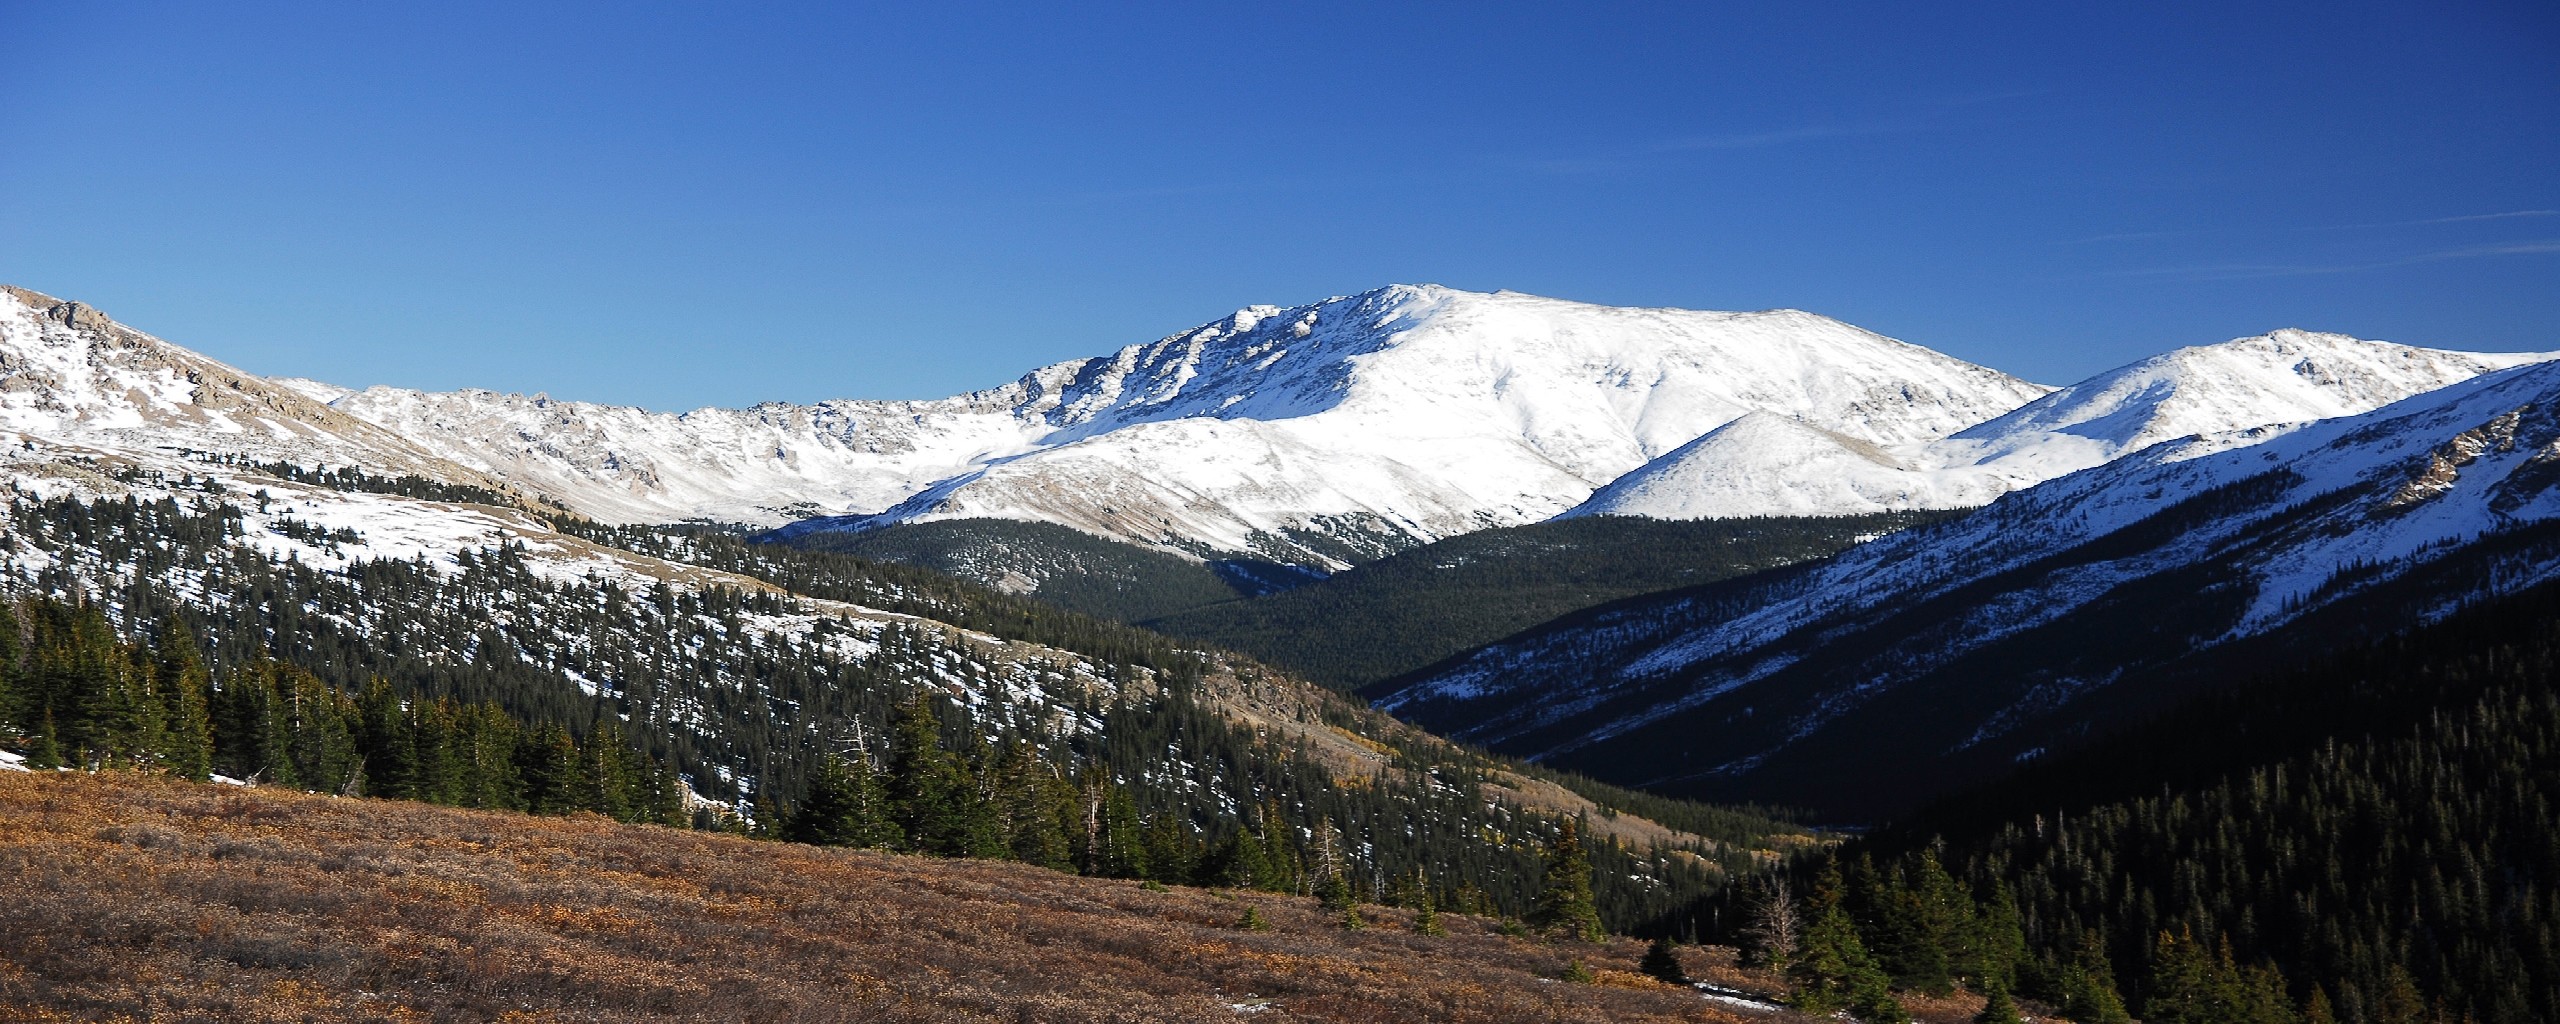 Landscape Snow Tundra 2560x1024